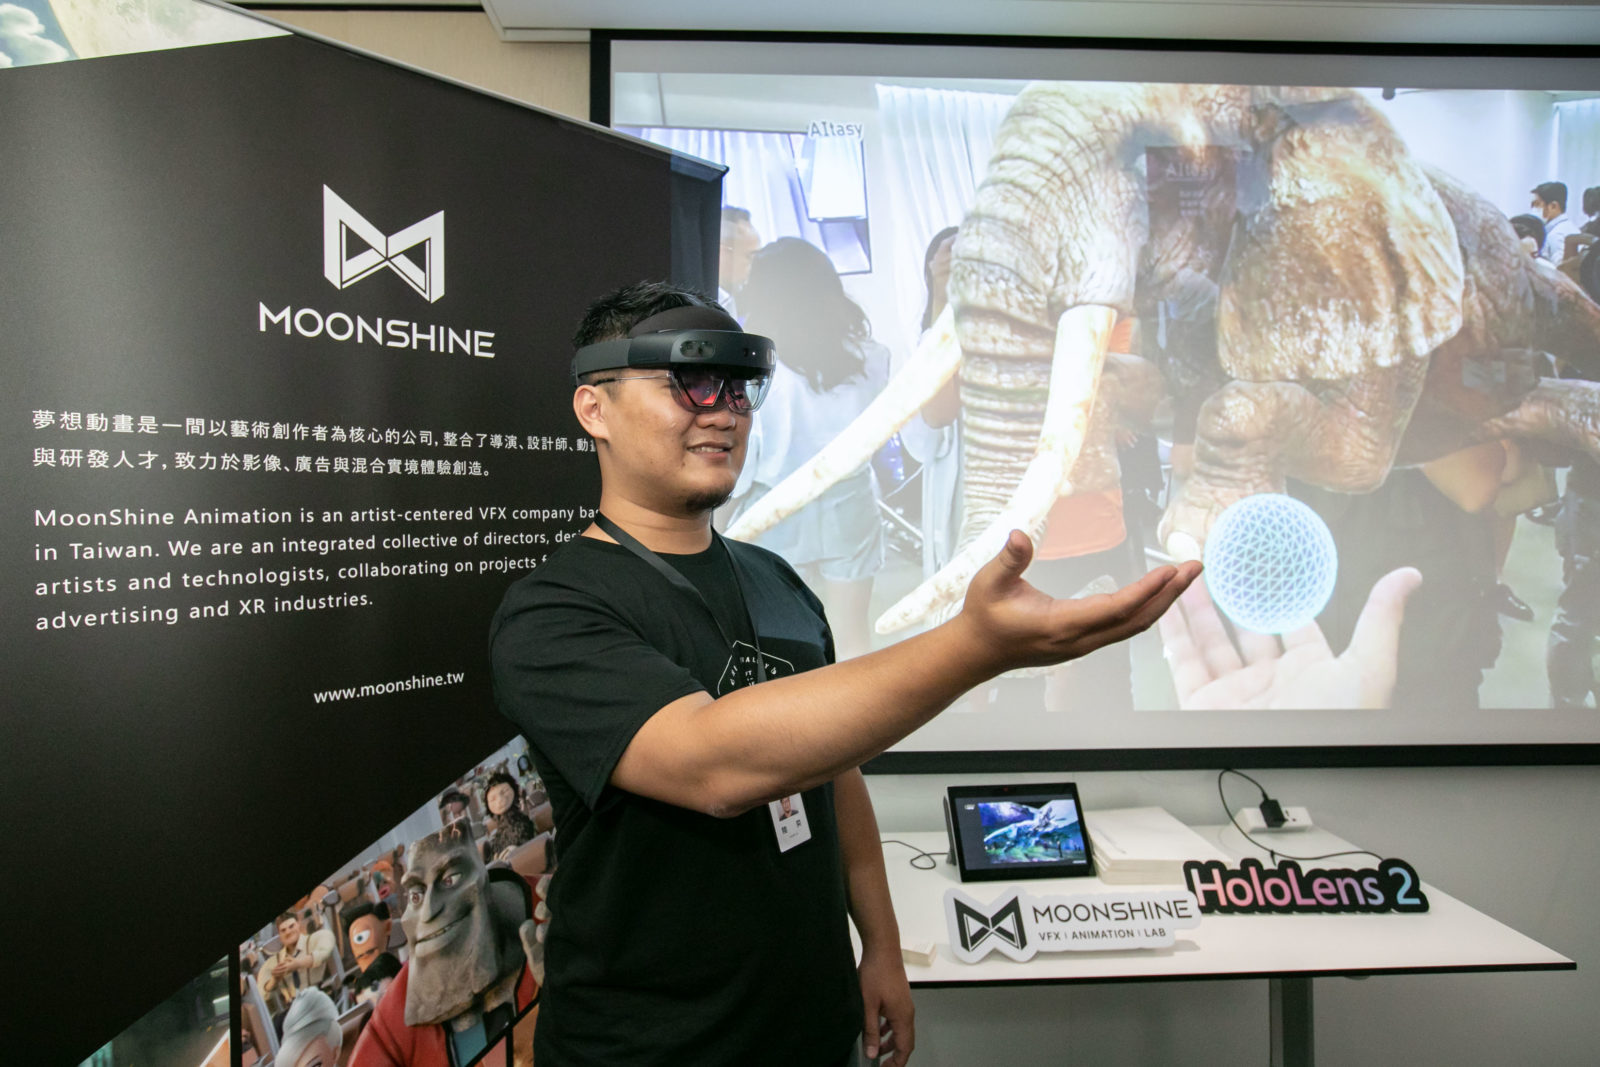 Moonshine夢想動畫以藝術創作結合HoloLens 2，打造沈浸式投影劇場，活動現場夢想動物園爲情境體驗，期為參與者帶來更全面的體驗，提升沈浸娛樂